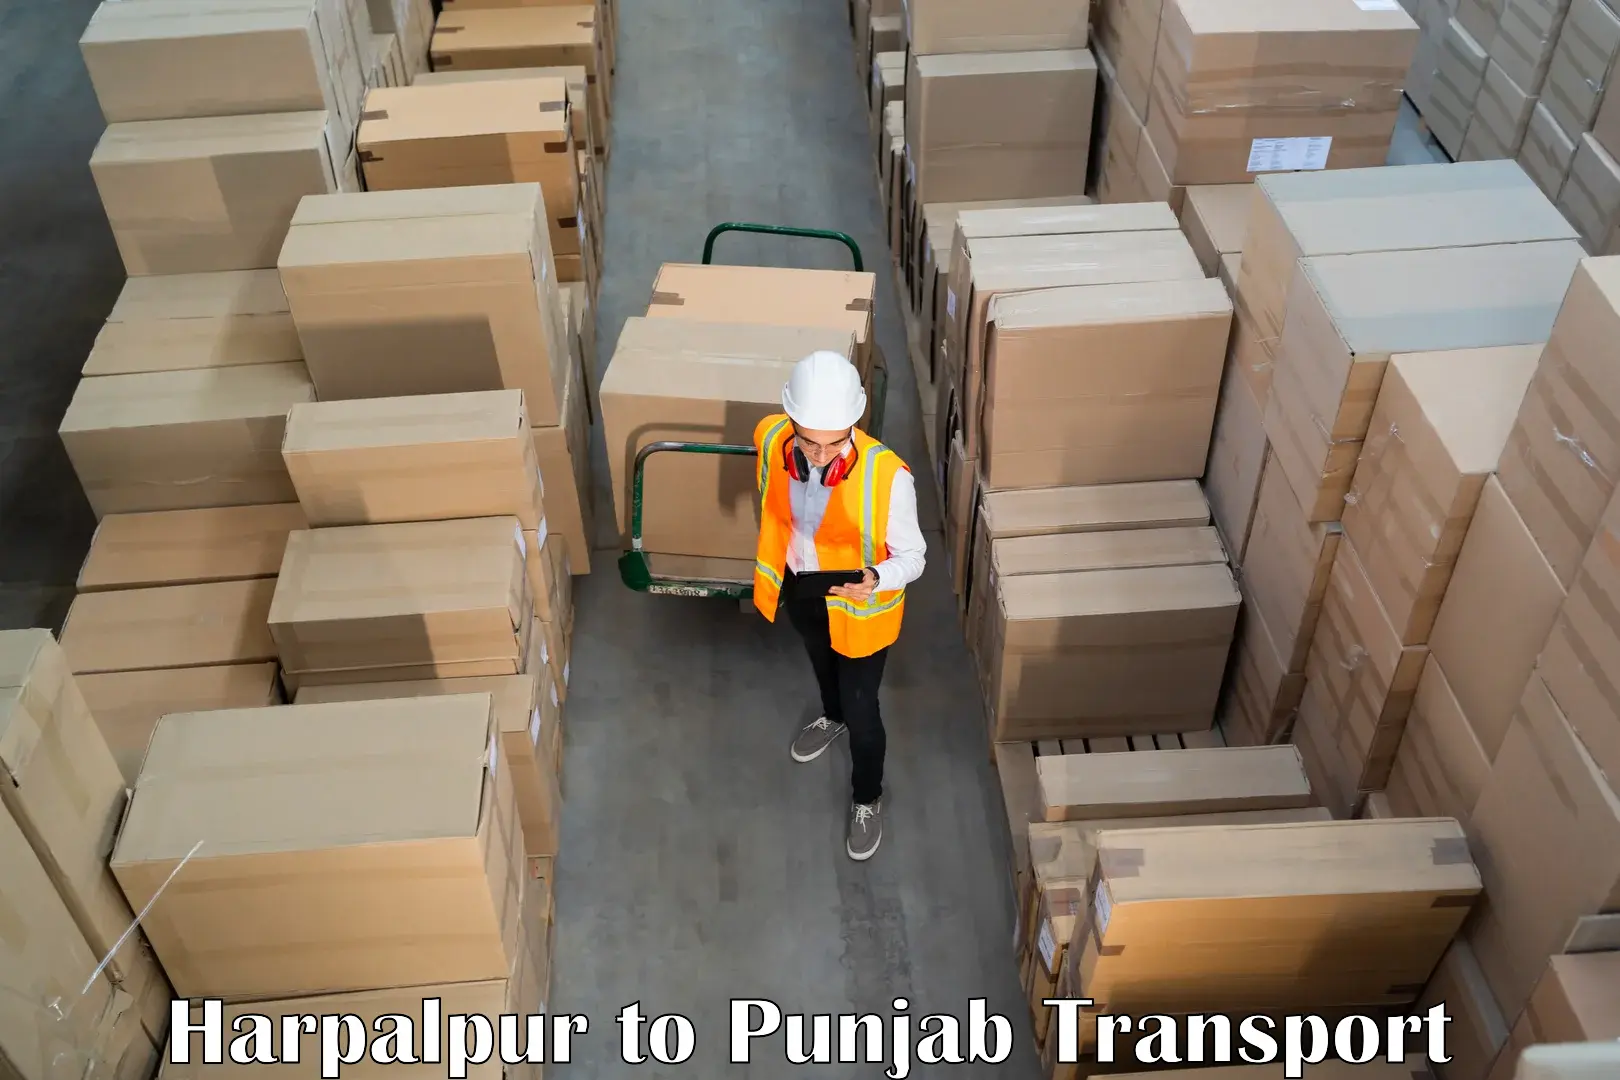 Daily parcel service transport Harpalpur to Nawanshahr